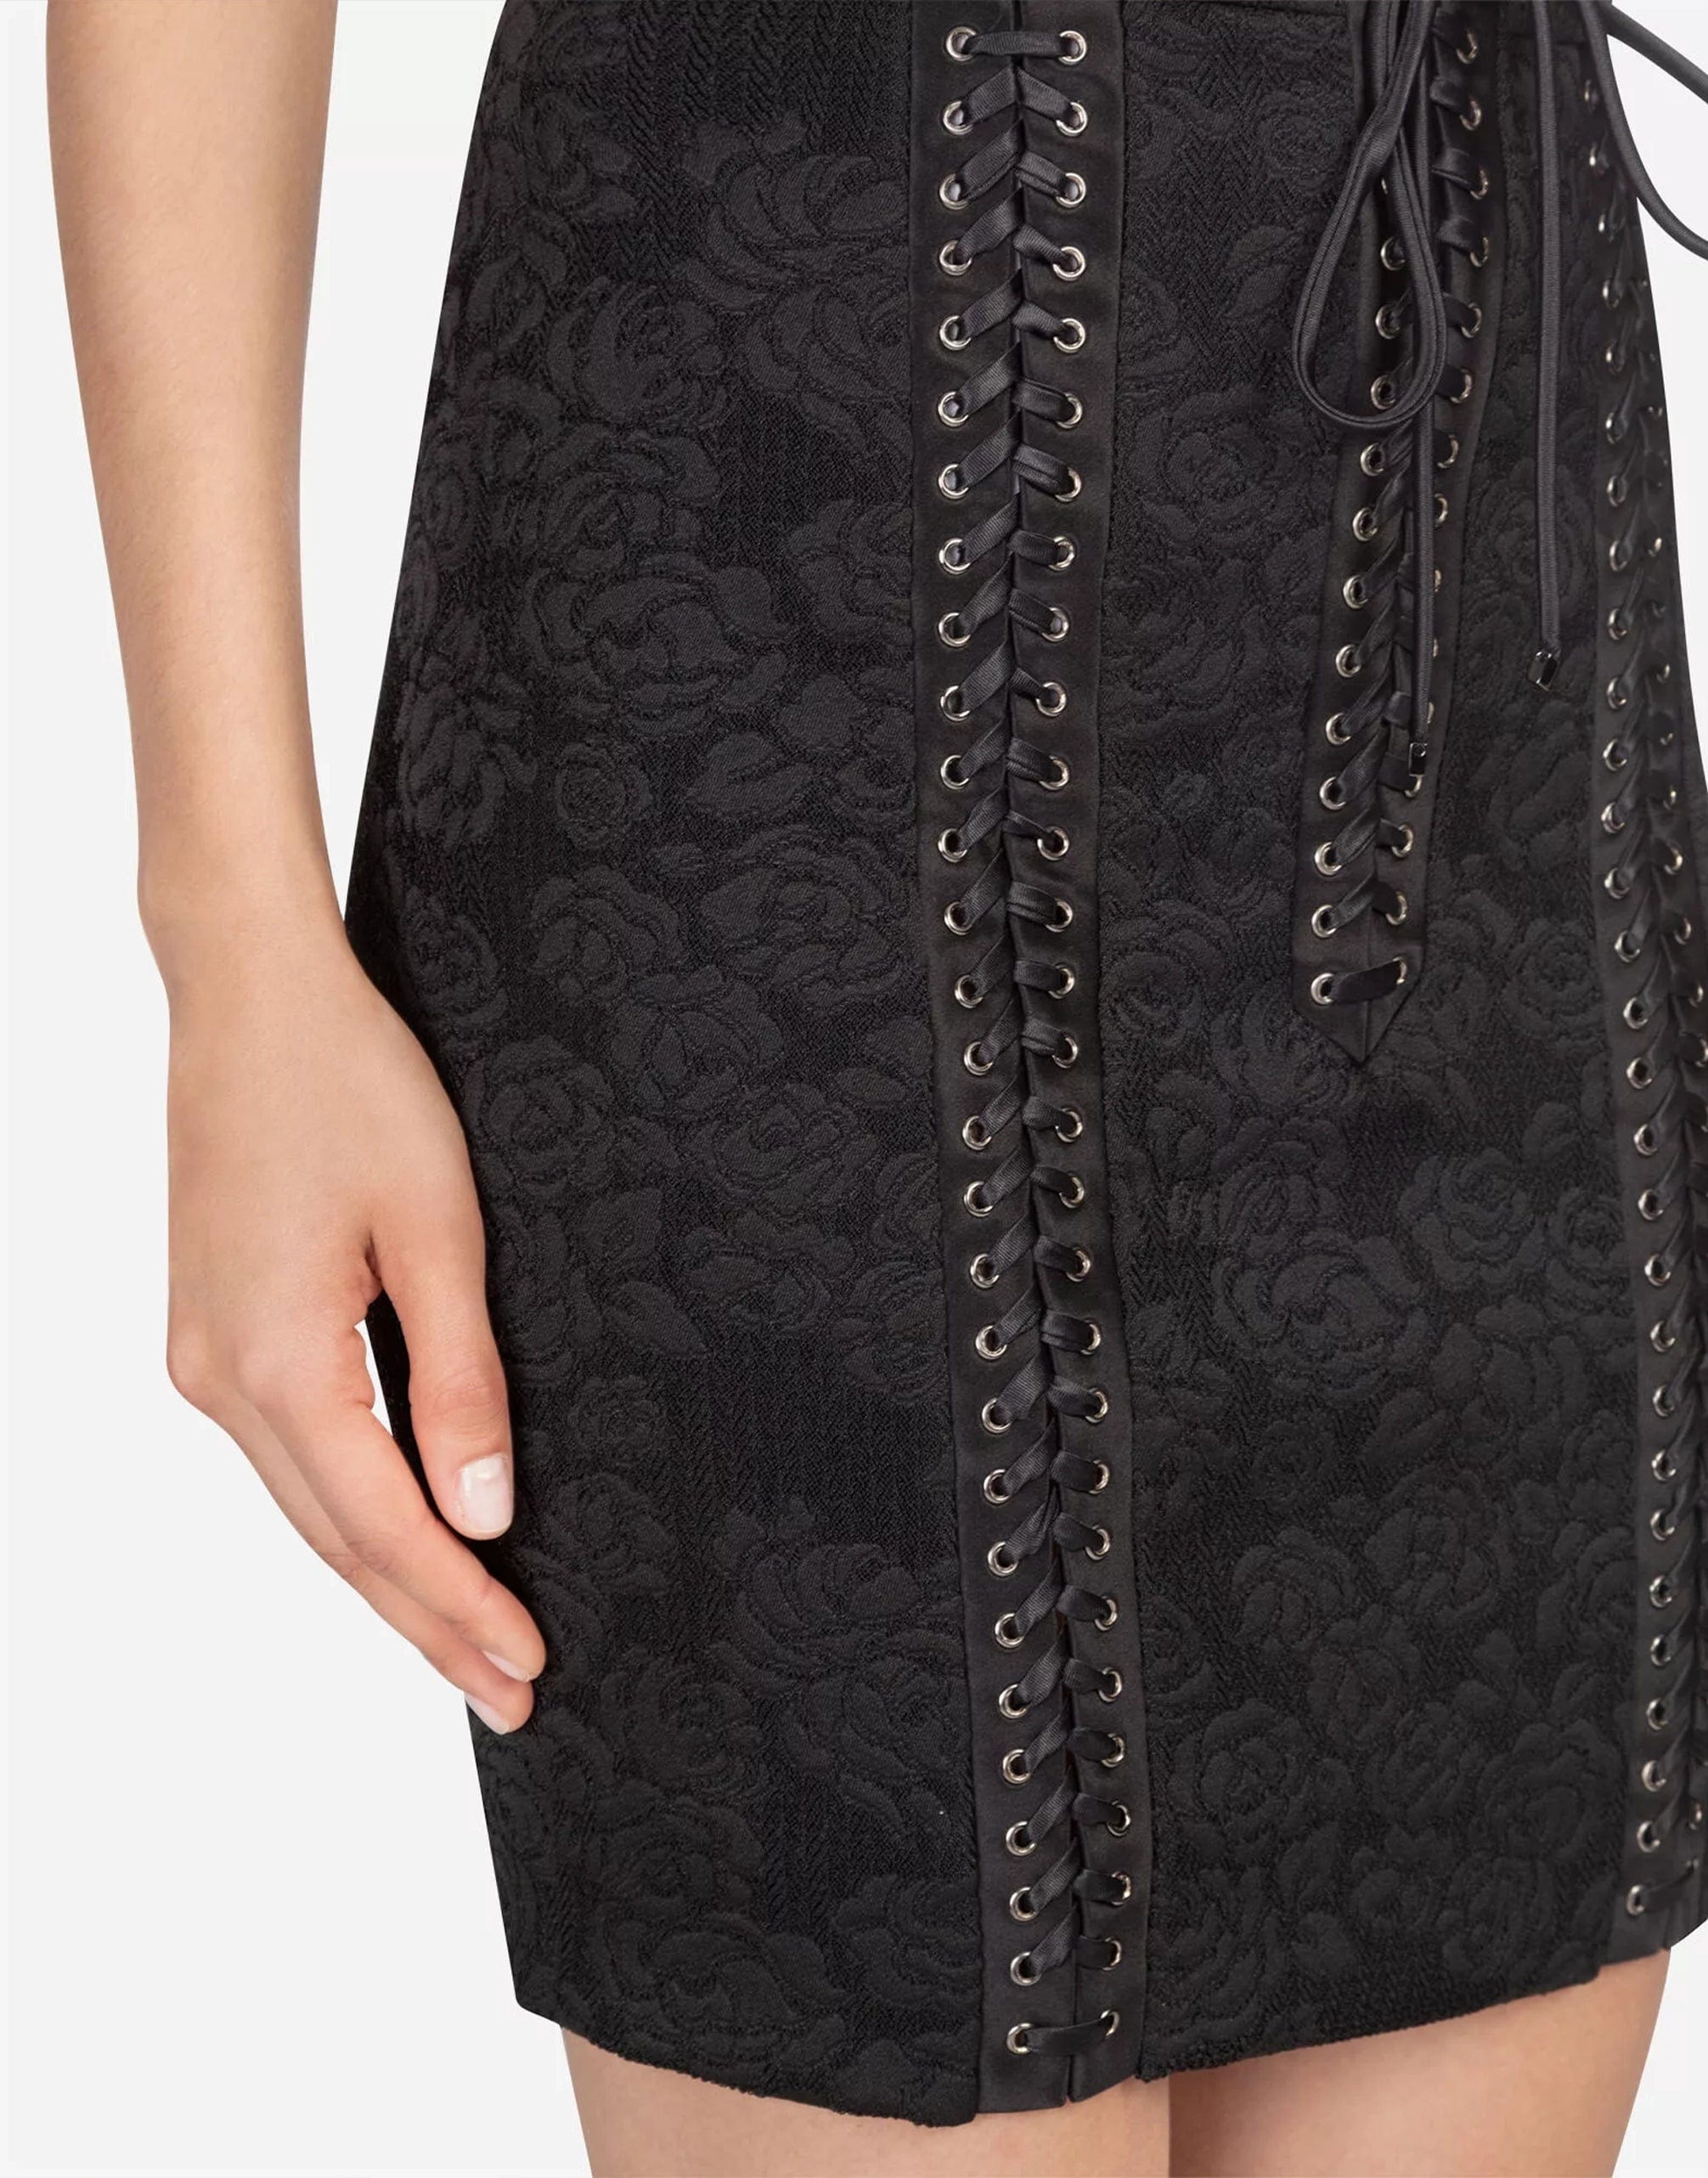 Dolce & Gabbana Short Skirt In Jacquard